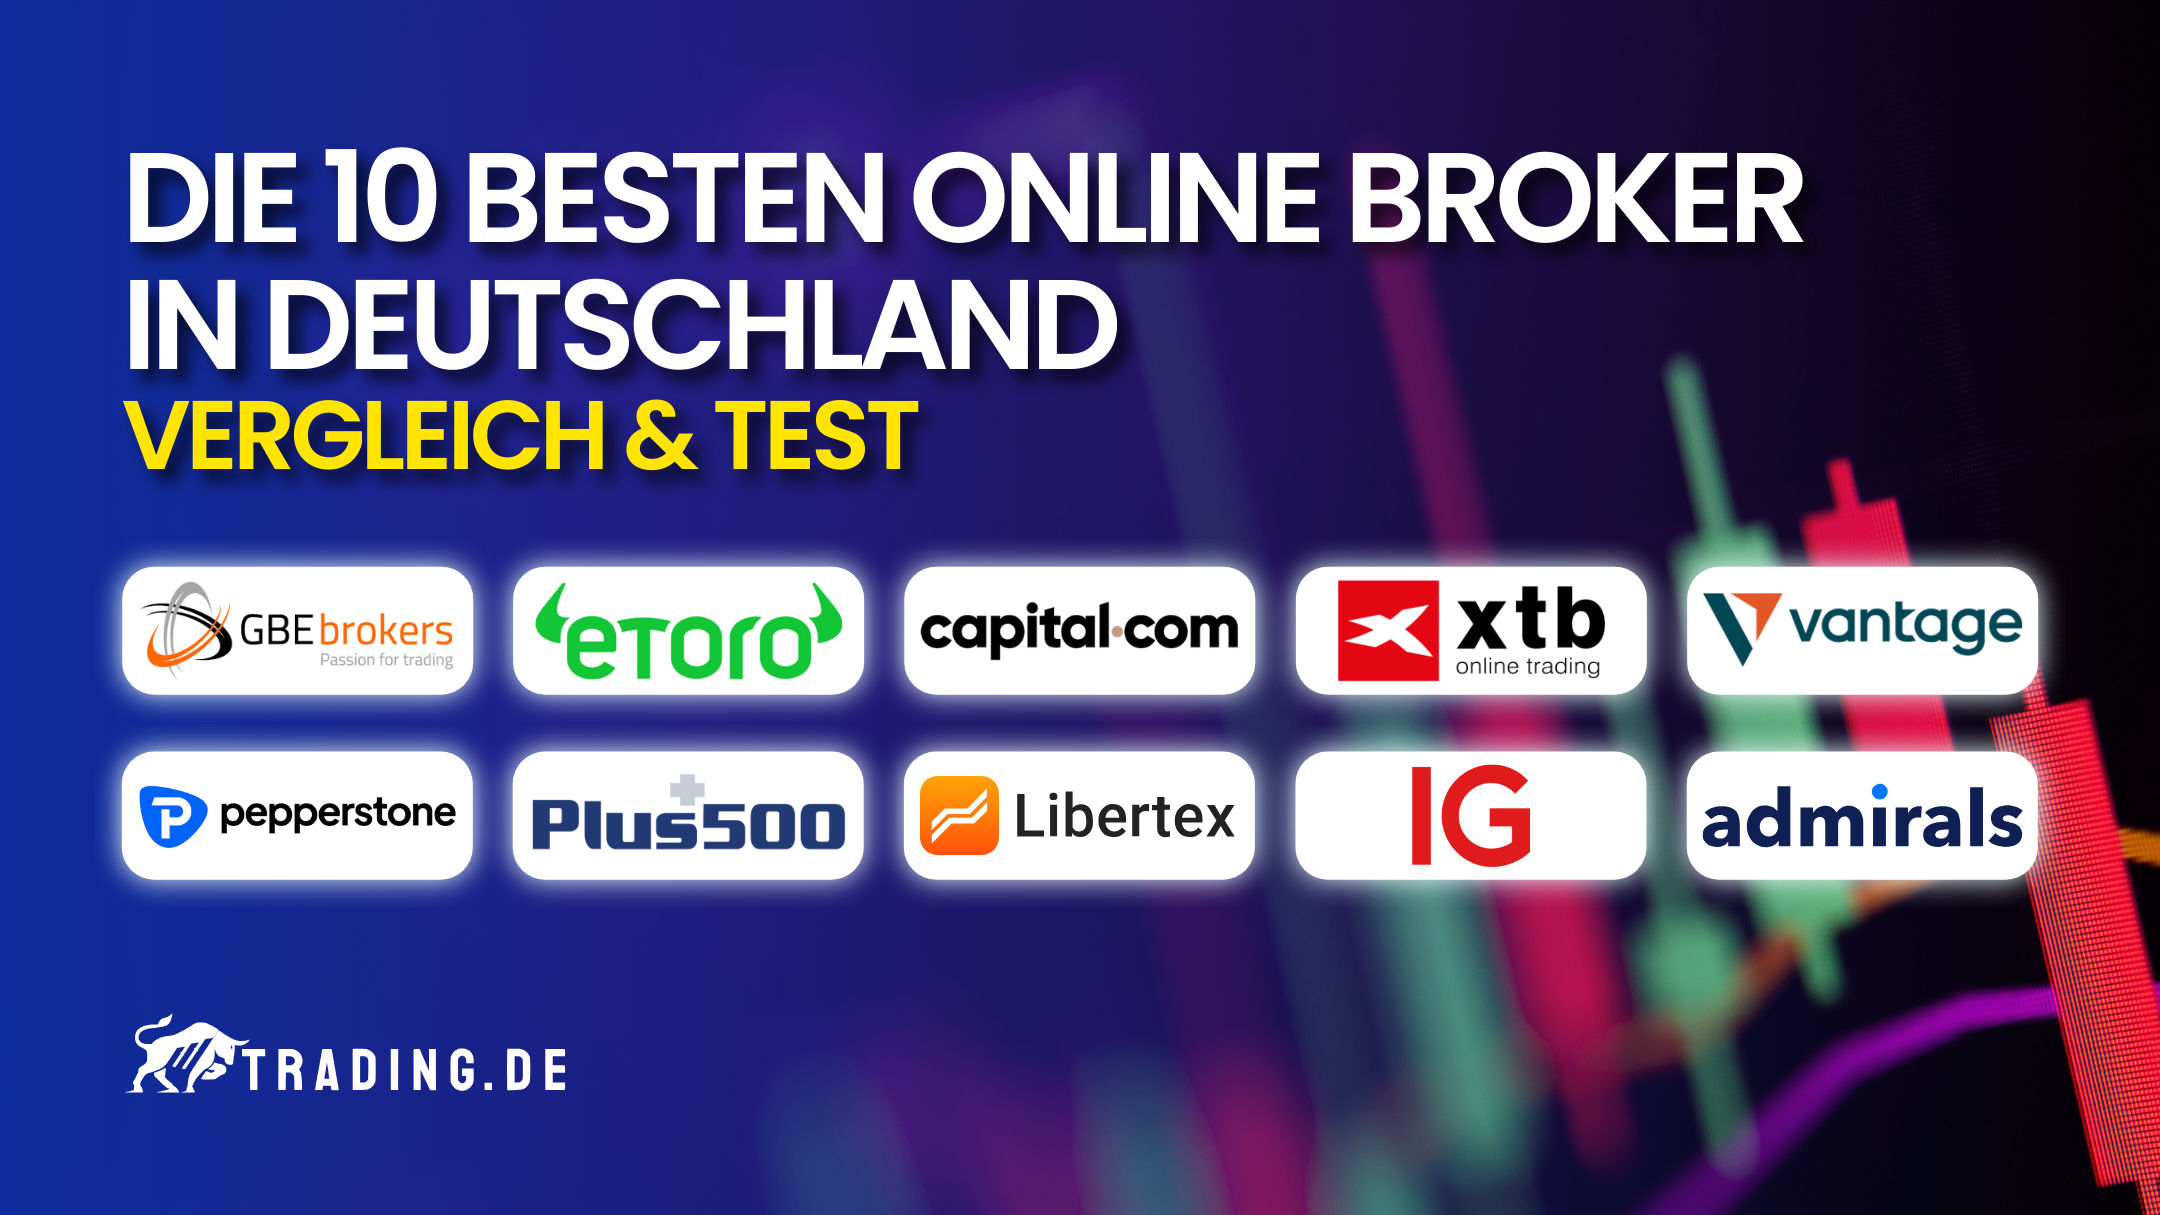 Die 10 besten Online Broker in Deutschland